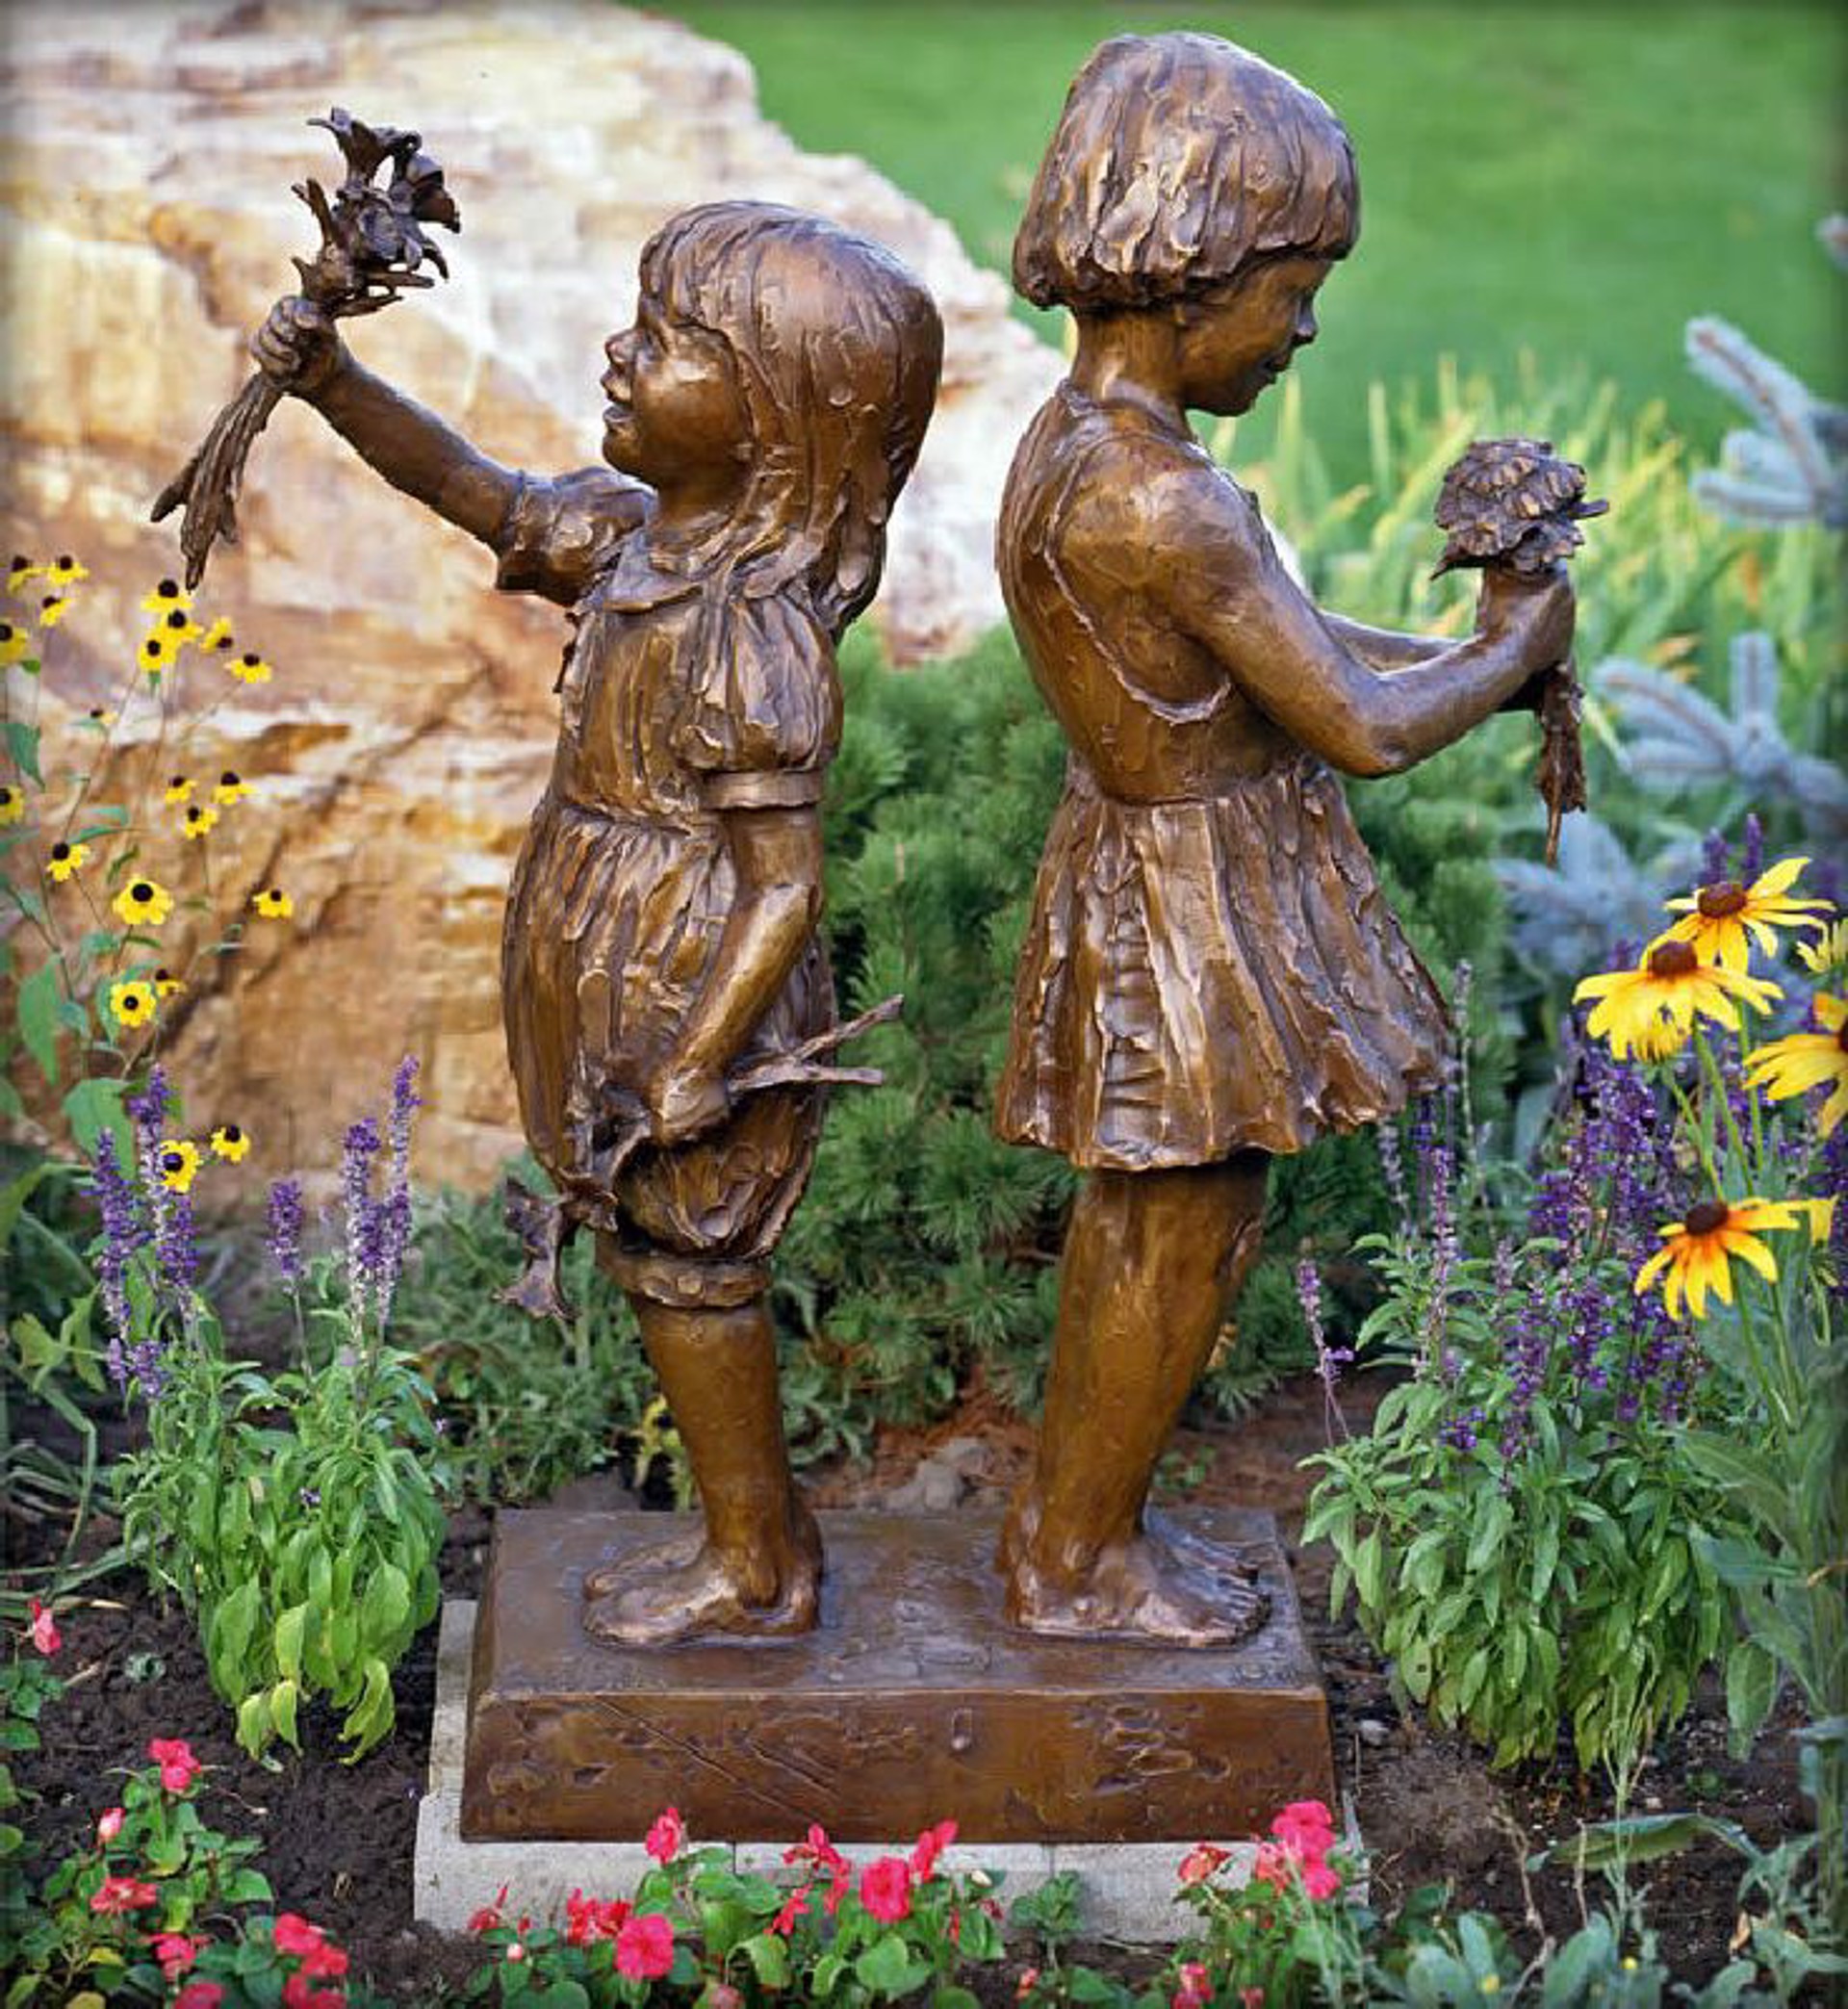 Flower Girls by Gary Lee Price (sculptor)